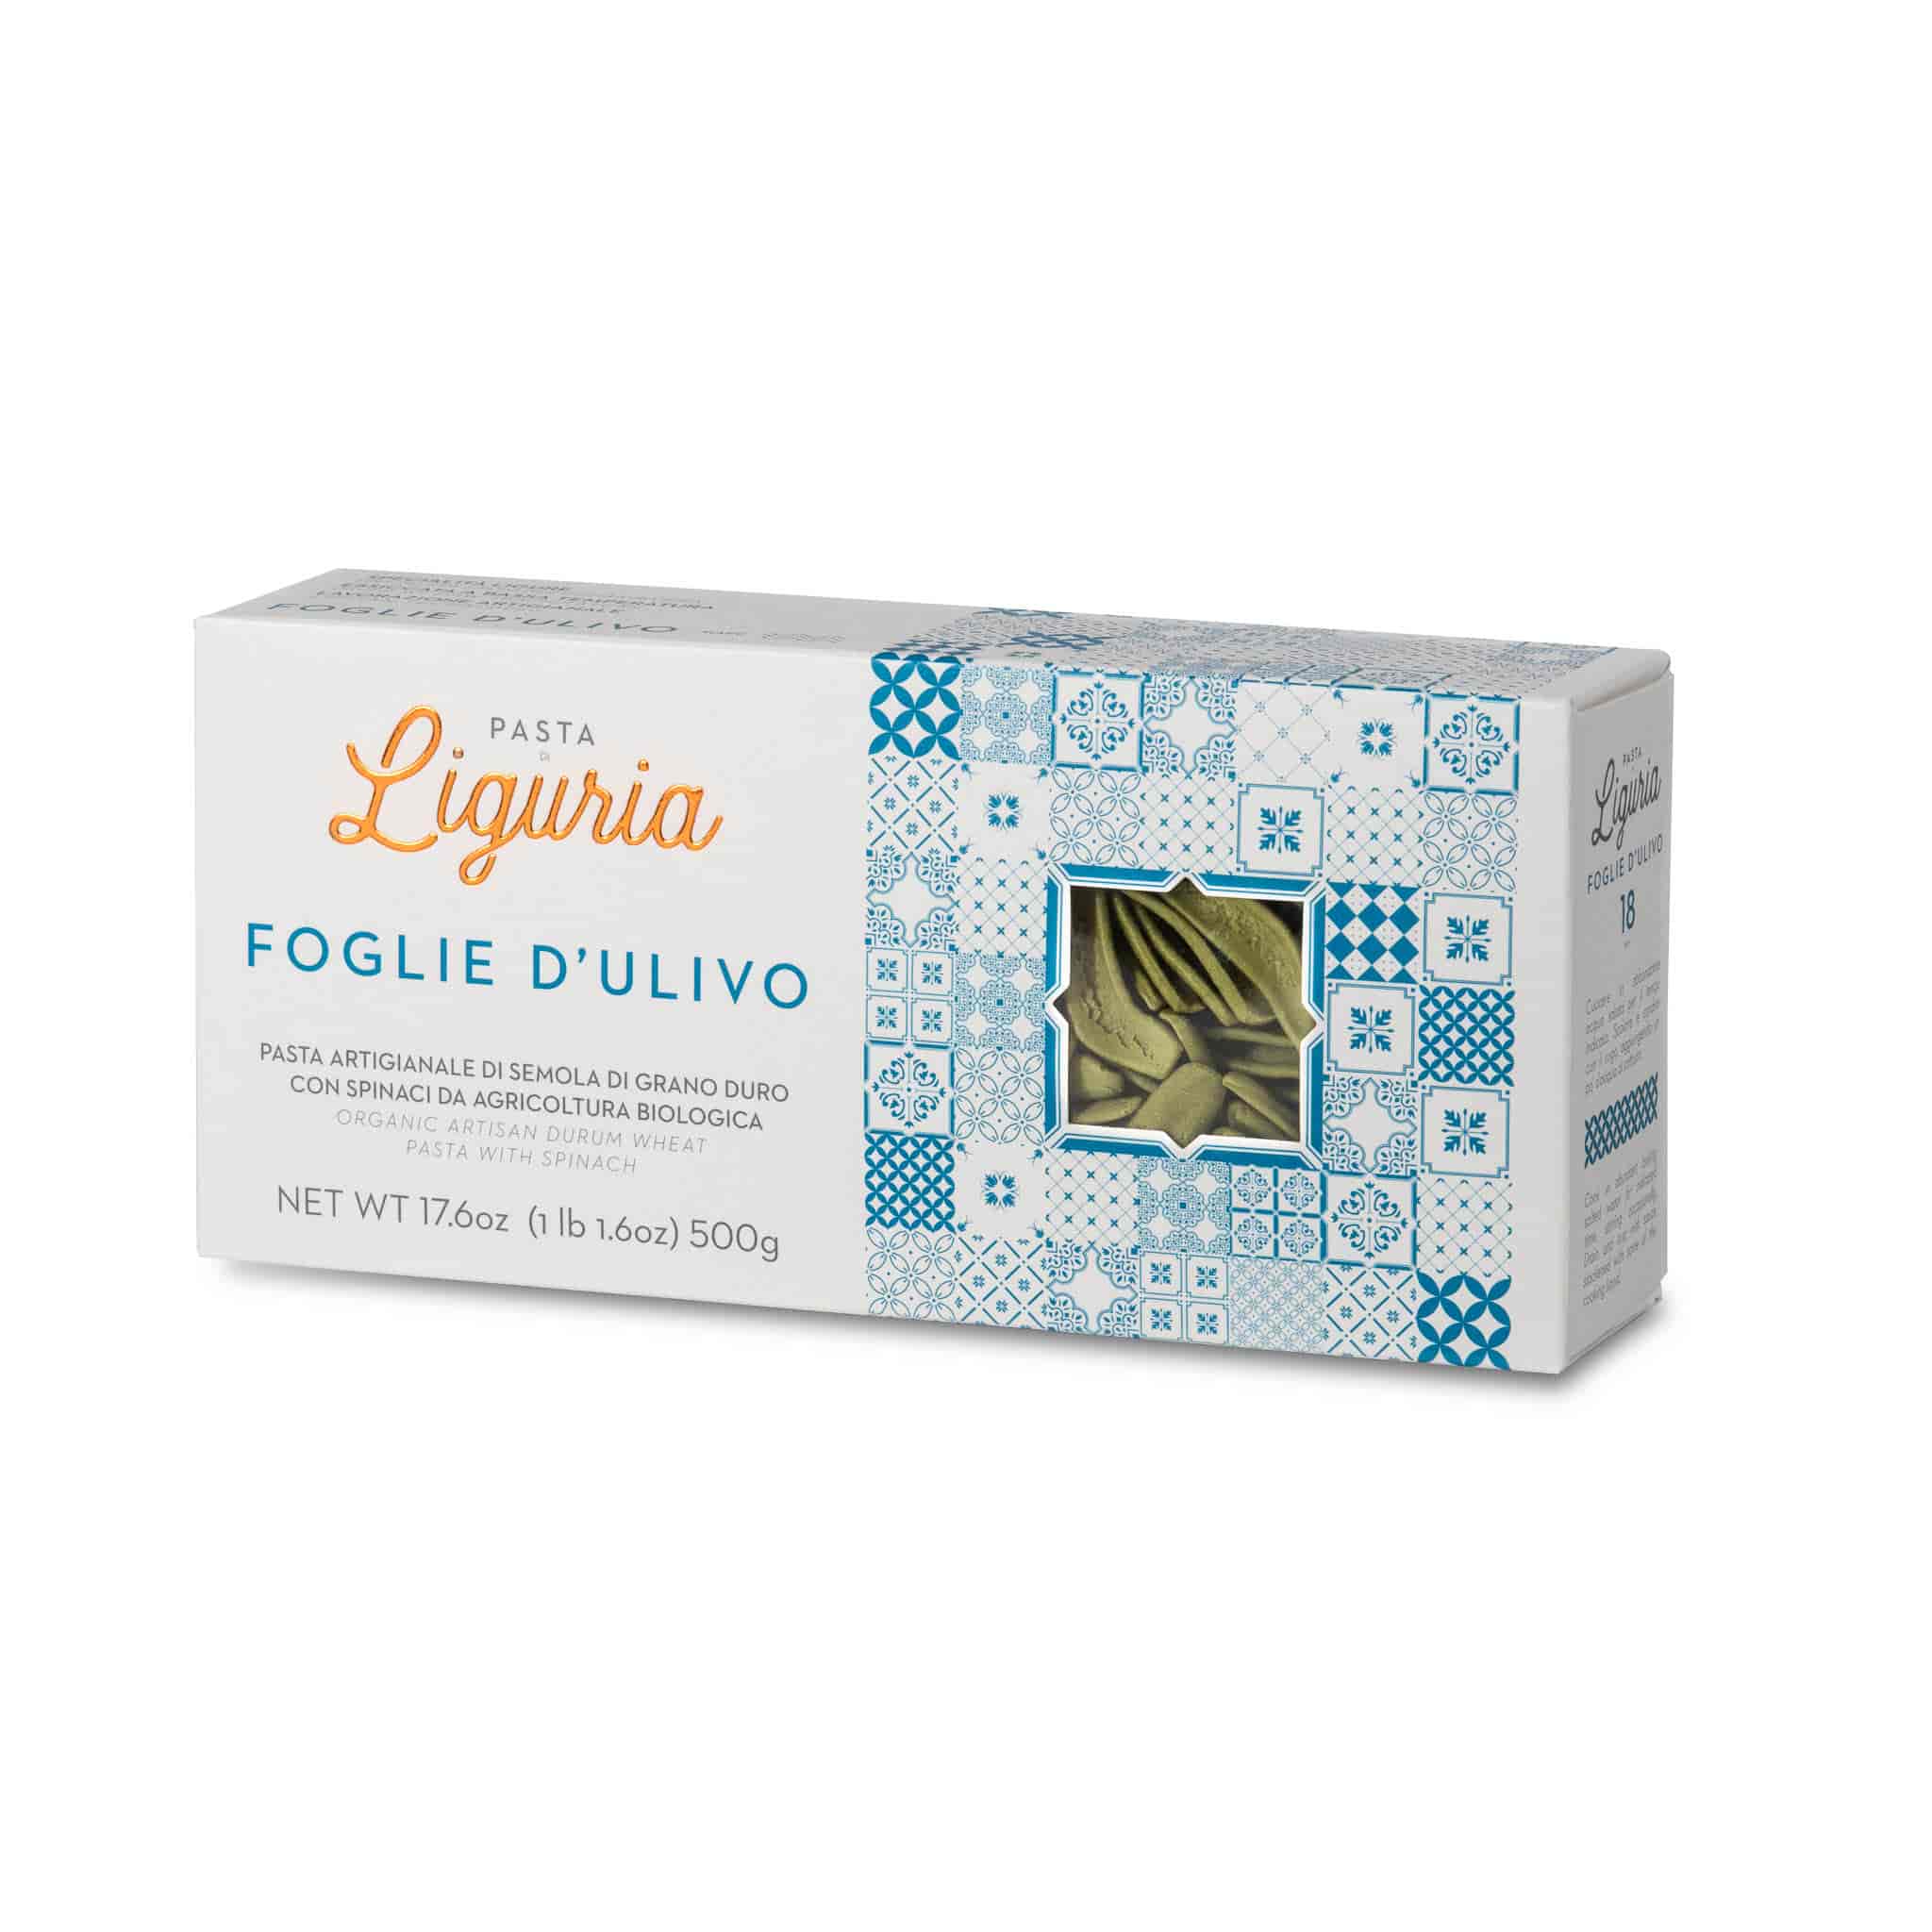 Pasta Liguria Foglie D'Ulivo, 500g